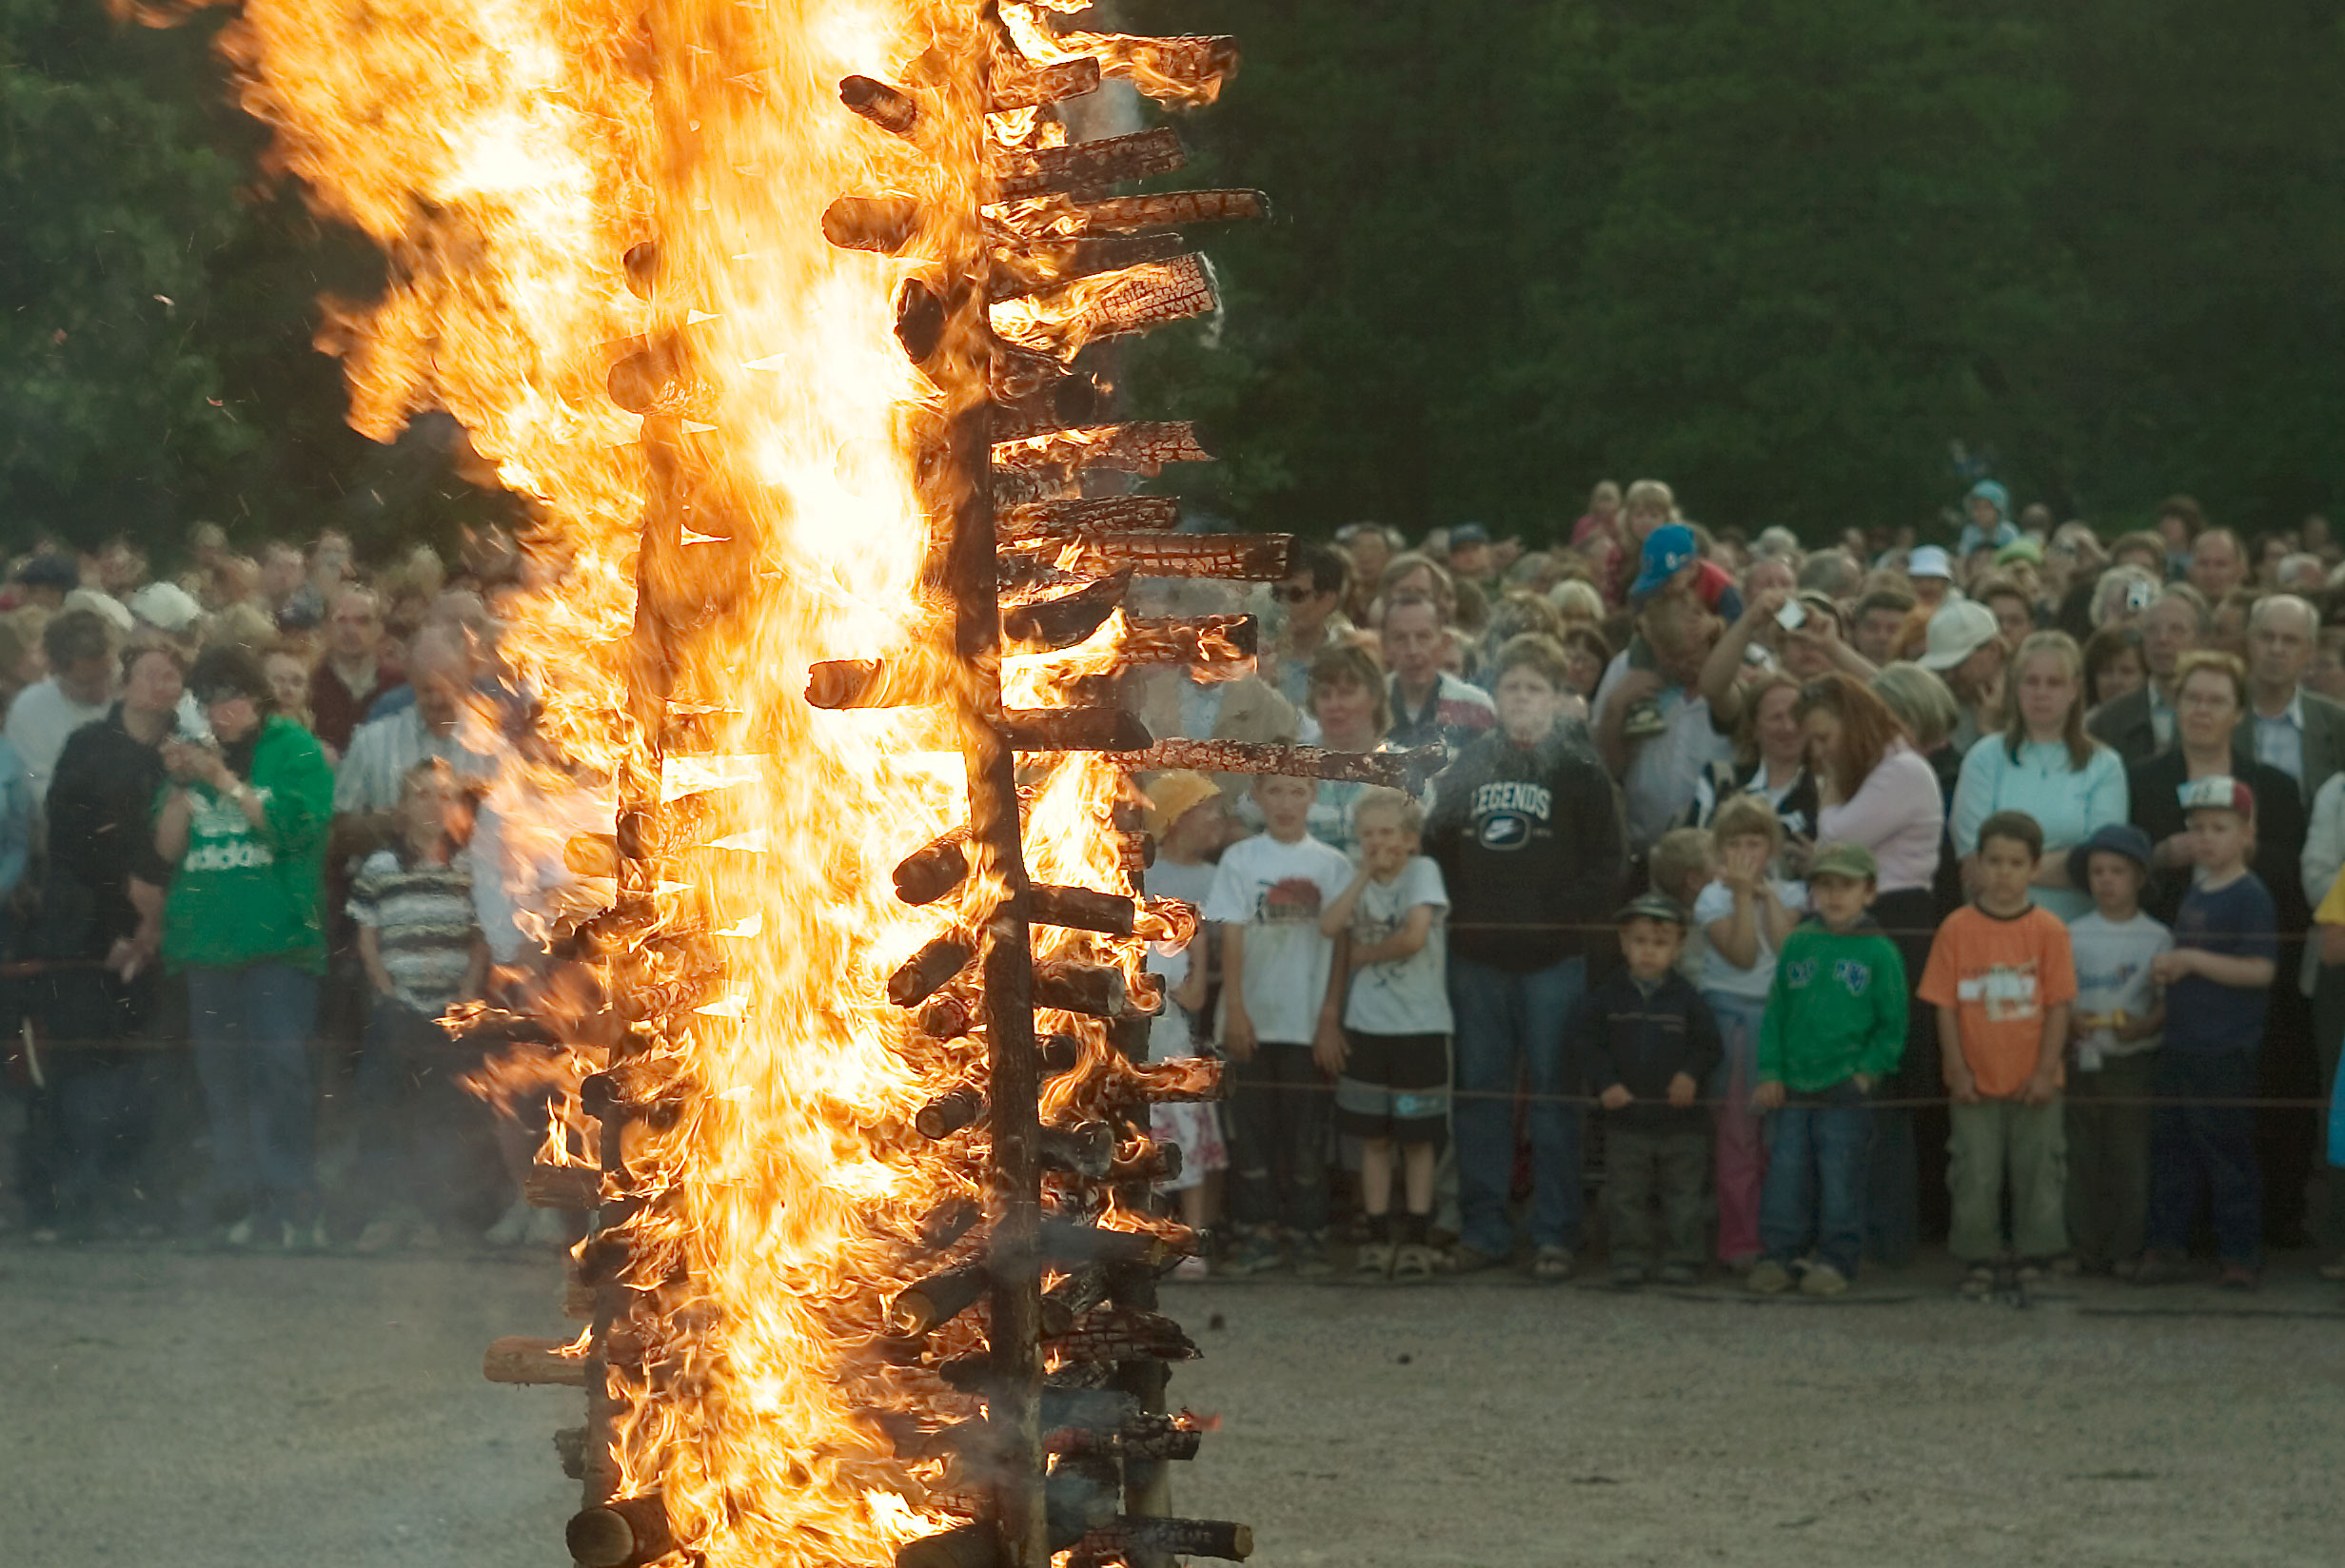 Seurasaari Midsummer Bonfires, Helsinki - Finland Festivals